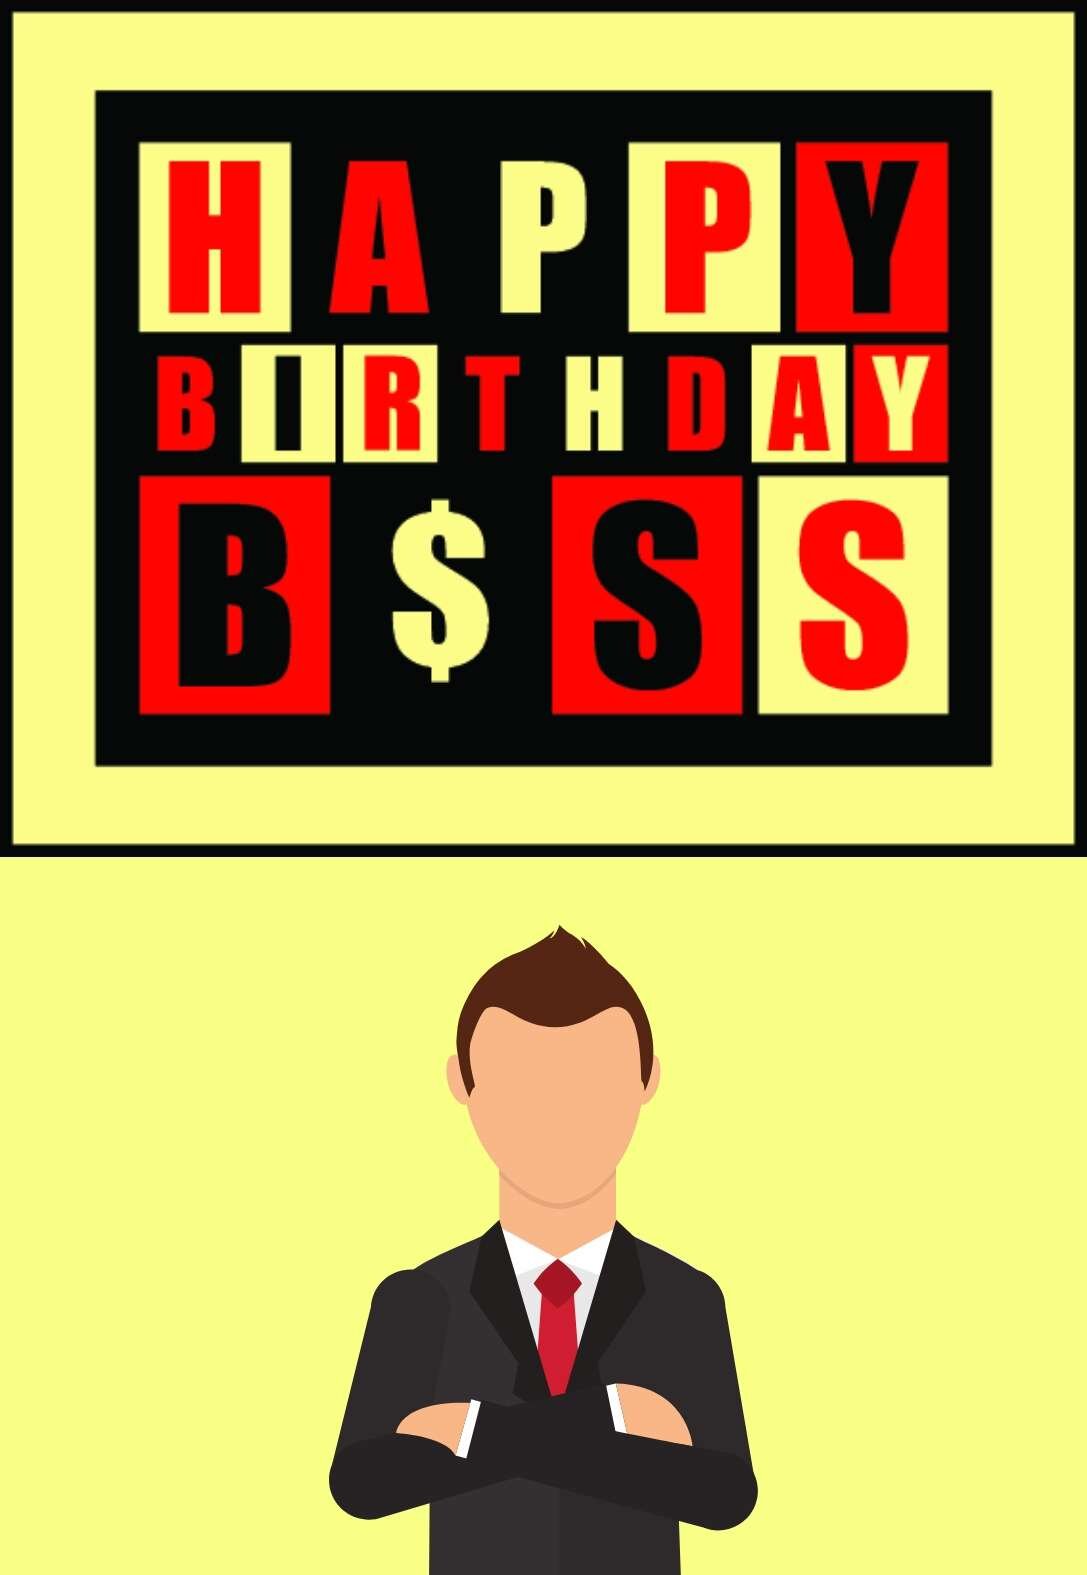 Boss Printable Birthday Cards — PRINTBIRTHDAY.CARDS